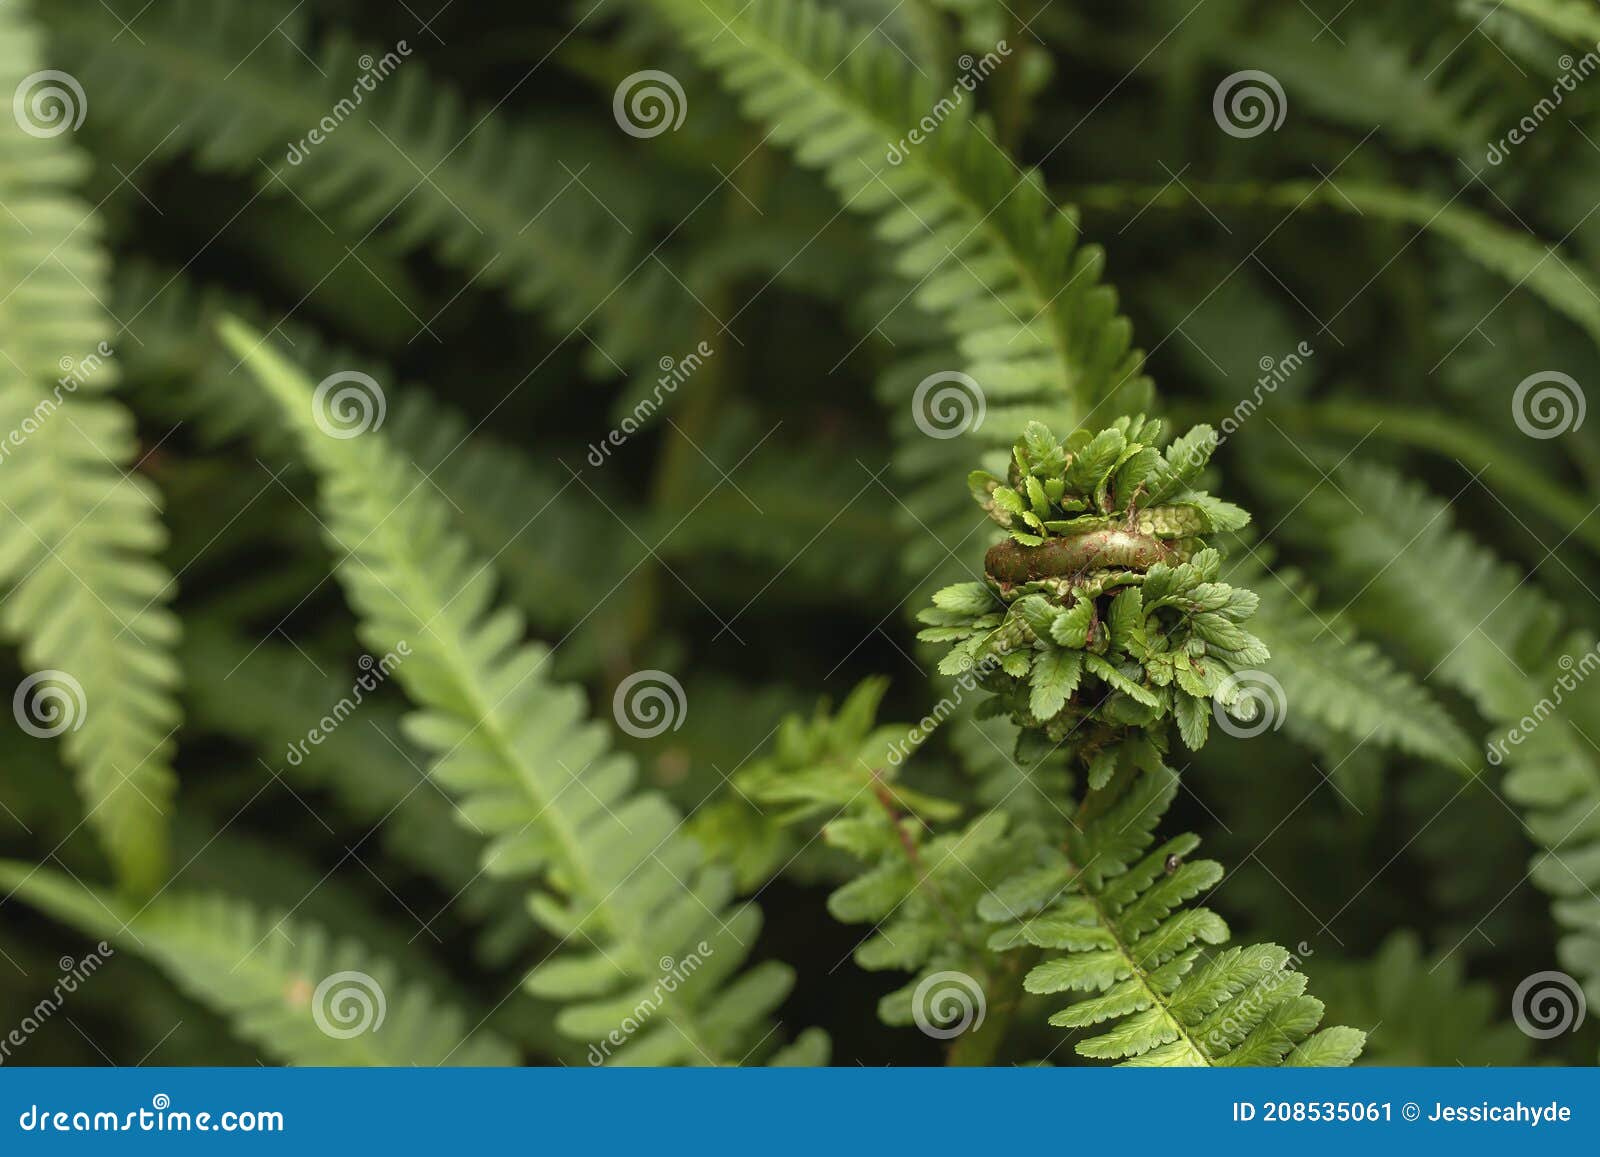 green fern fronds detail